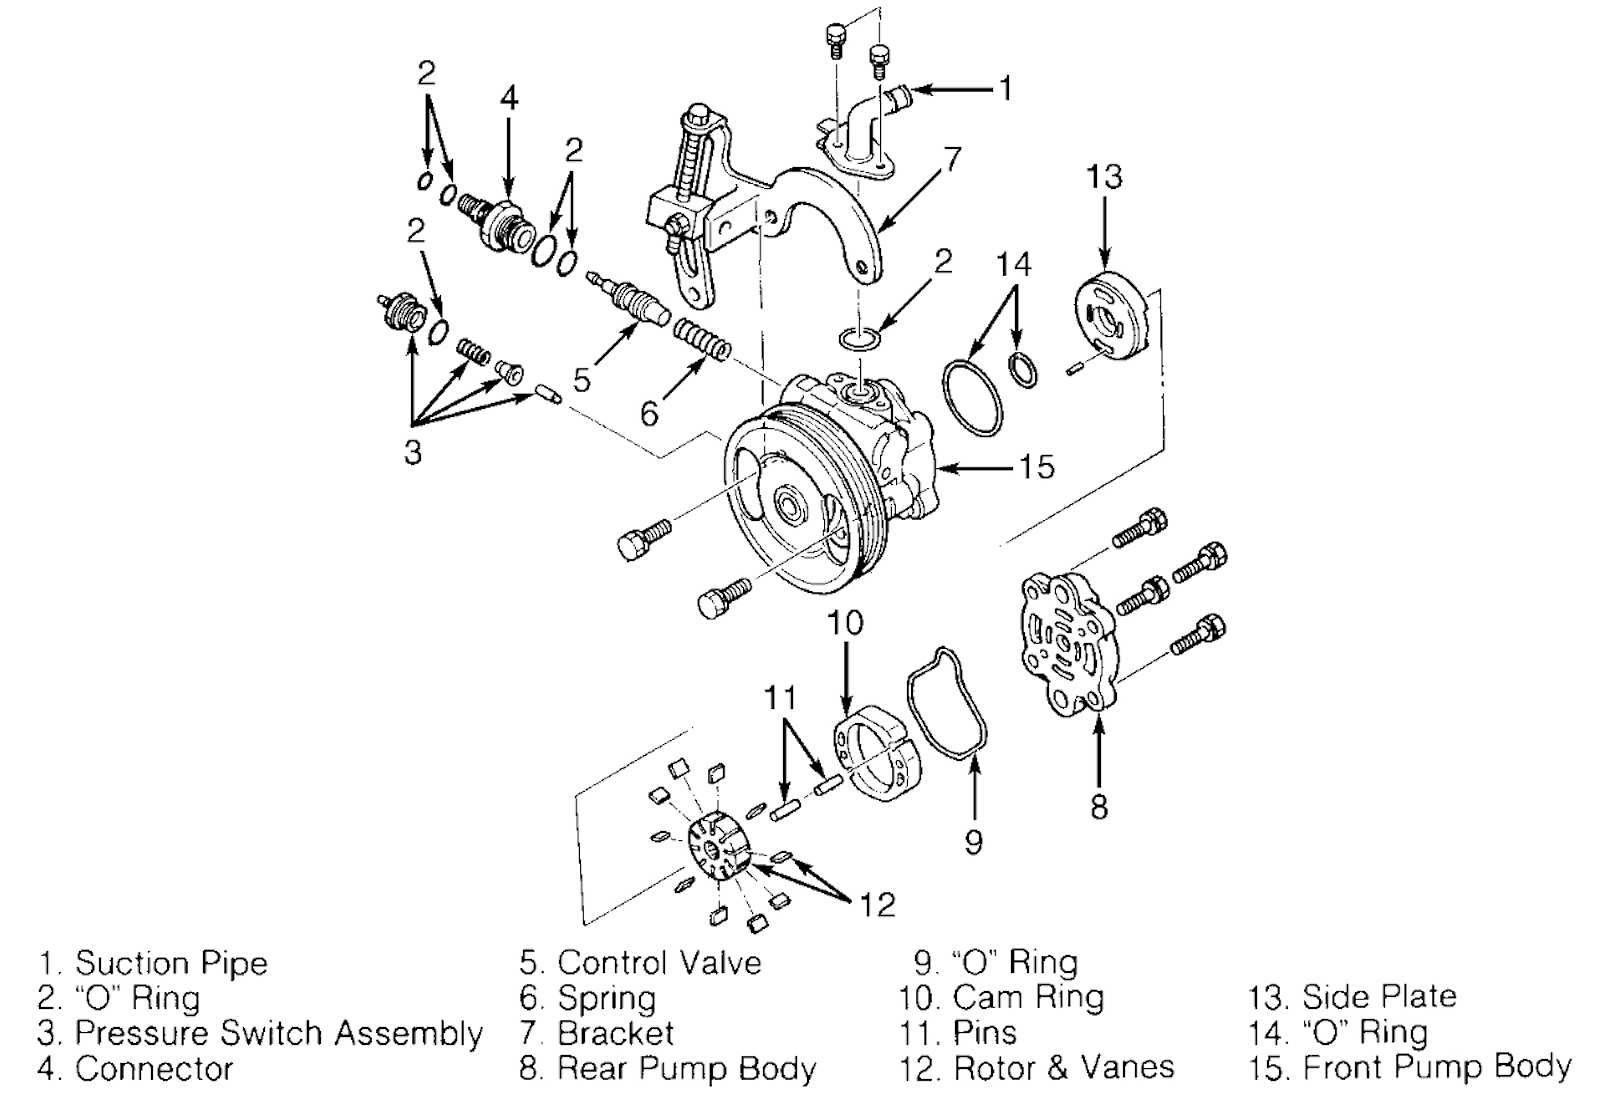 Power steering pump factory service manual